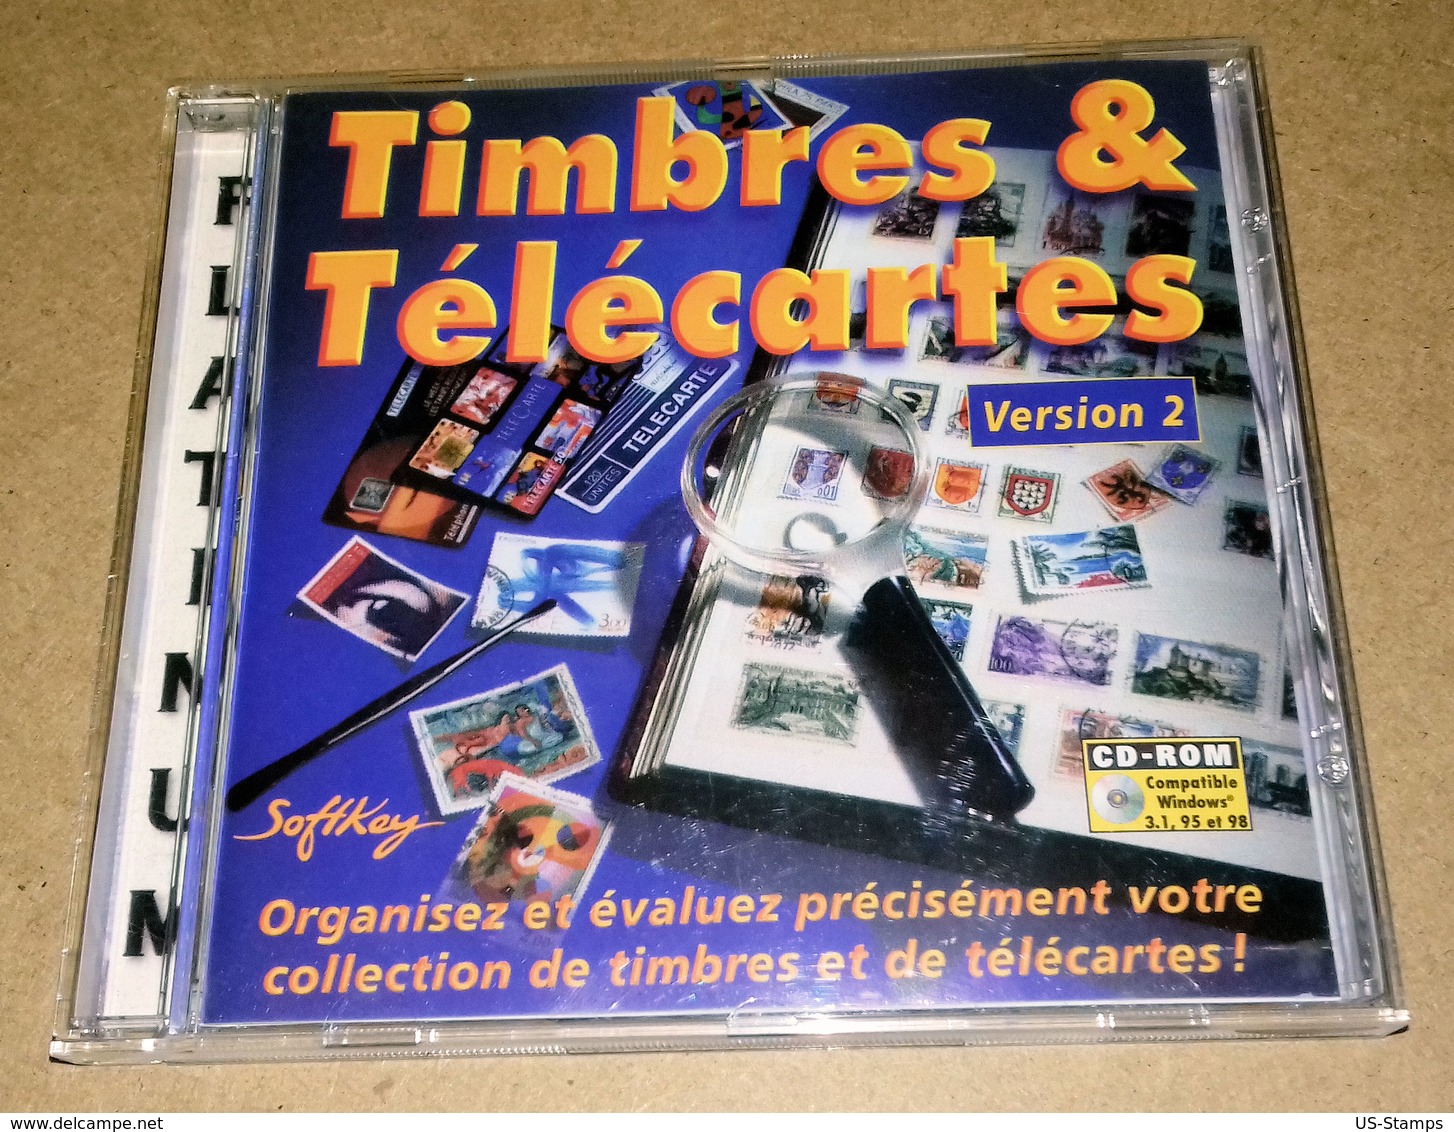 CD Timbres Et Télécartes Version 2 (SoftKey) - French